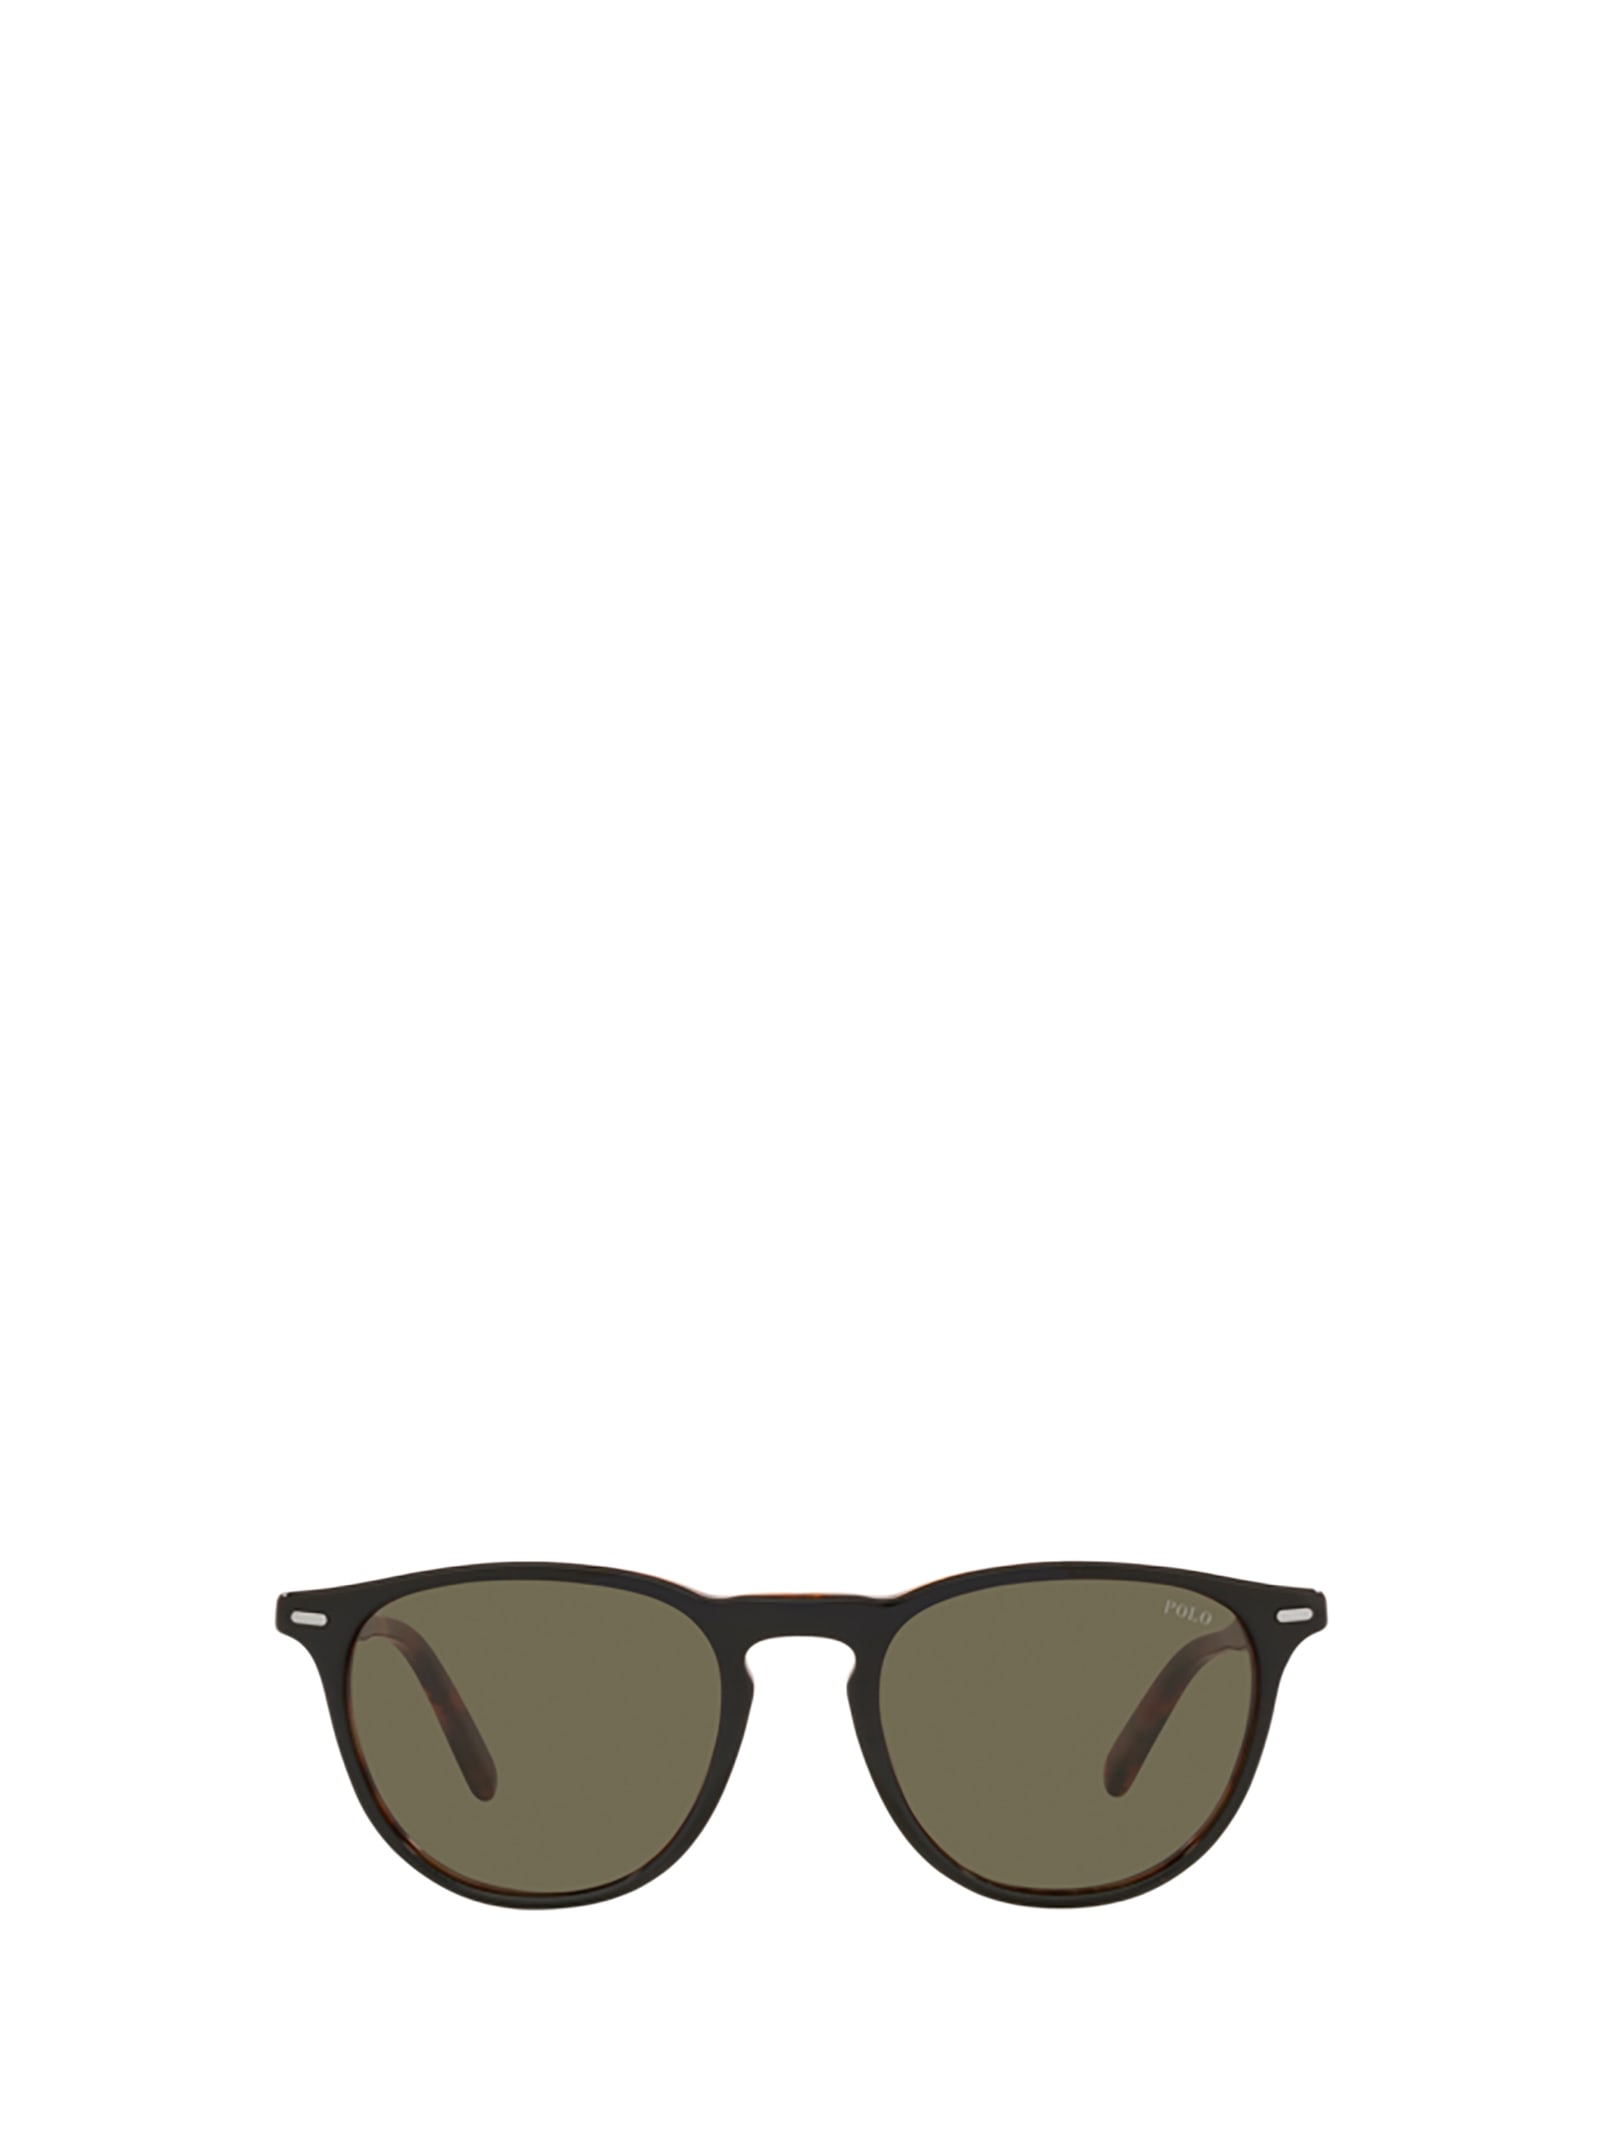 Polo Ralph Lauren Ph4181 Shiny Black Havana Sunglasses